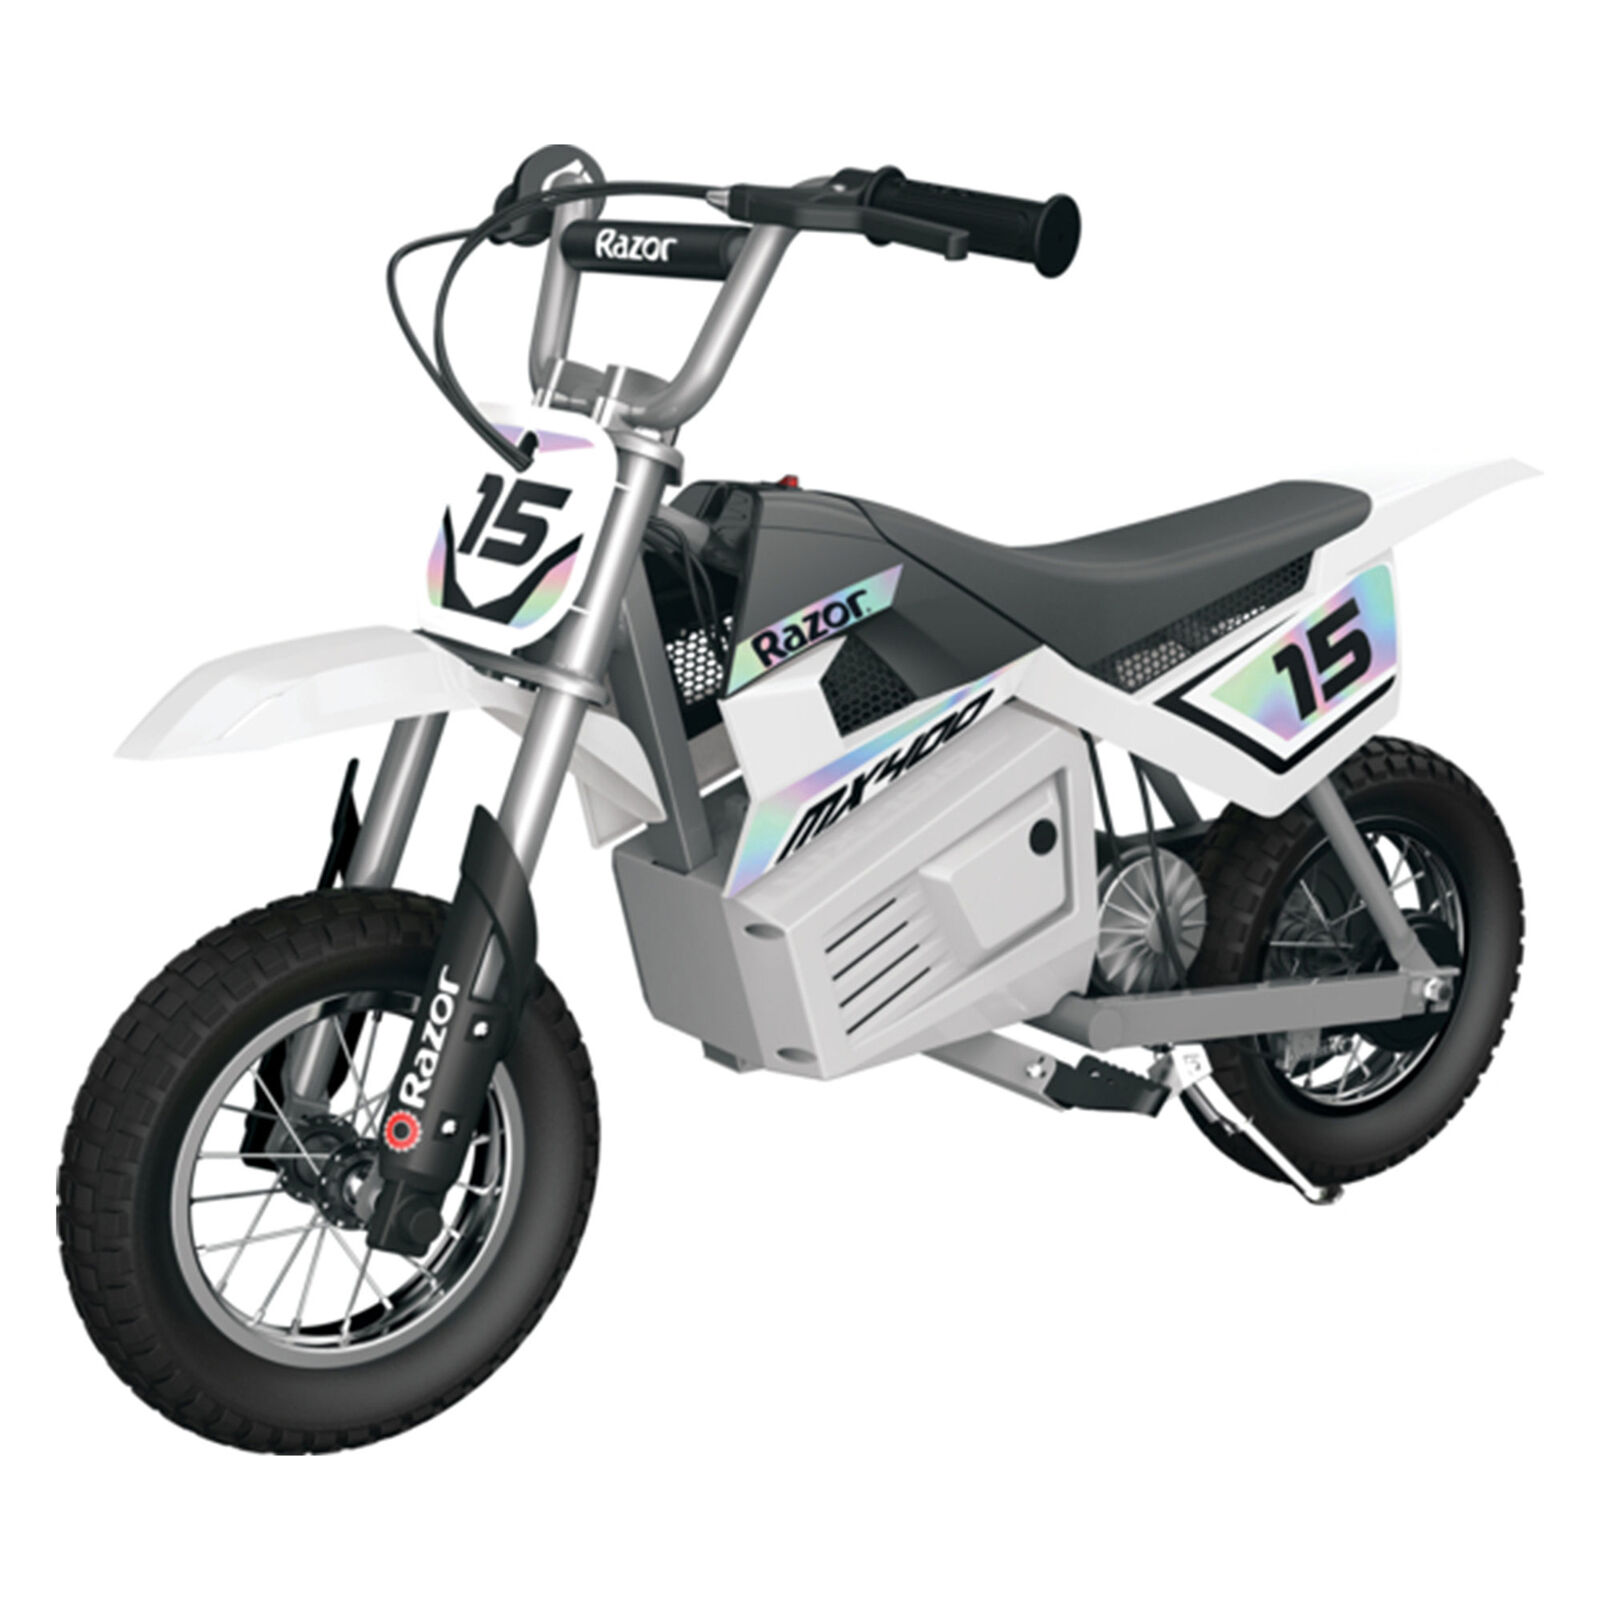 Razor MX400 Dirt Rocket 24V Electric Dirt Bike $235.62 w/ free shipping